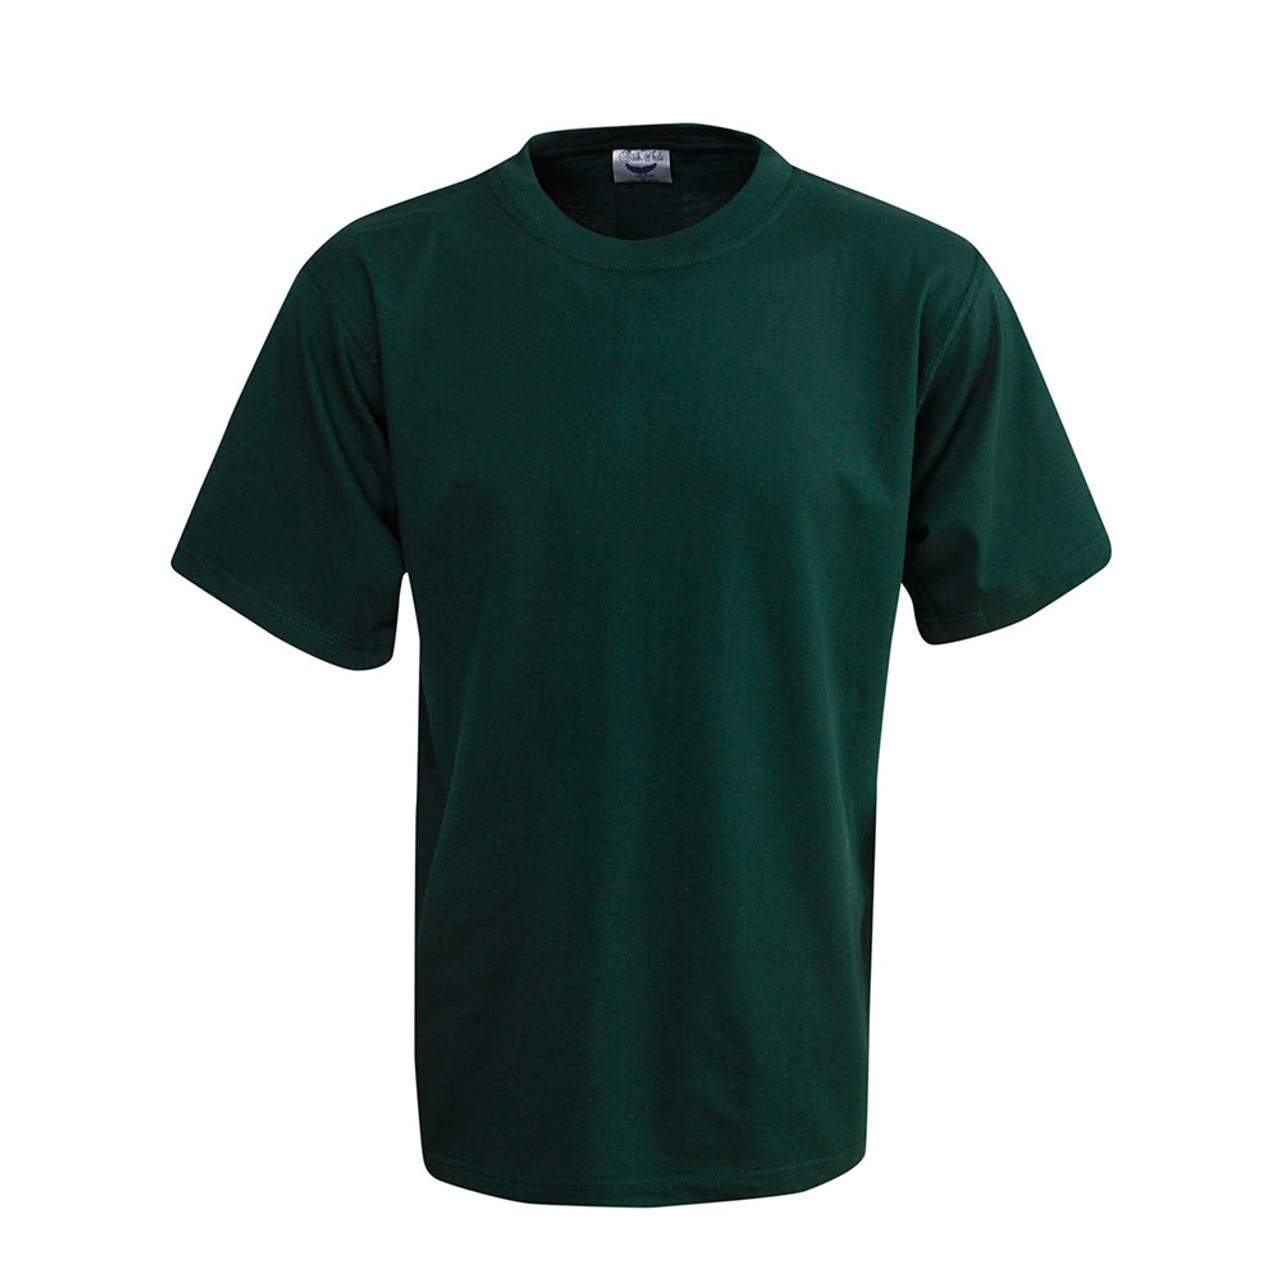 Get Kids Plain Blank T-Shirt | Plain Kids Clothes Online